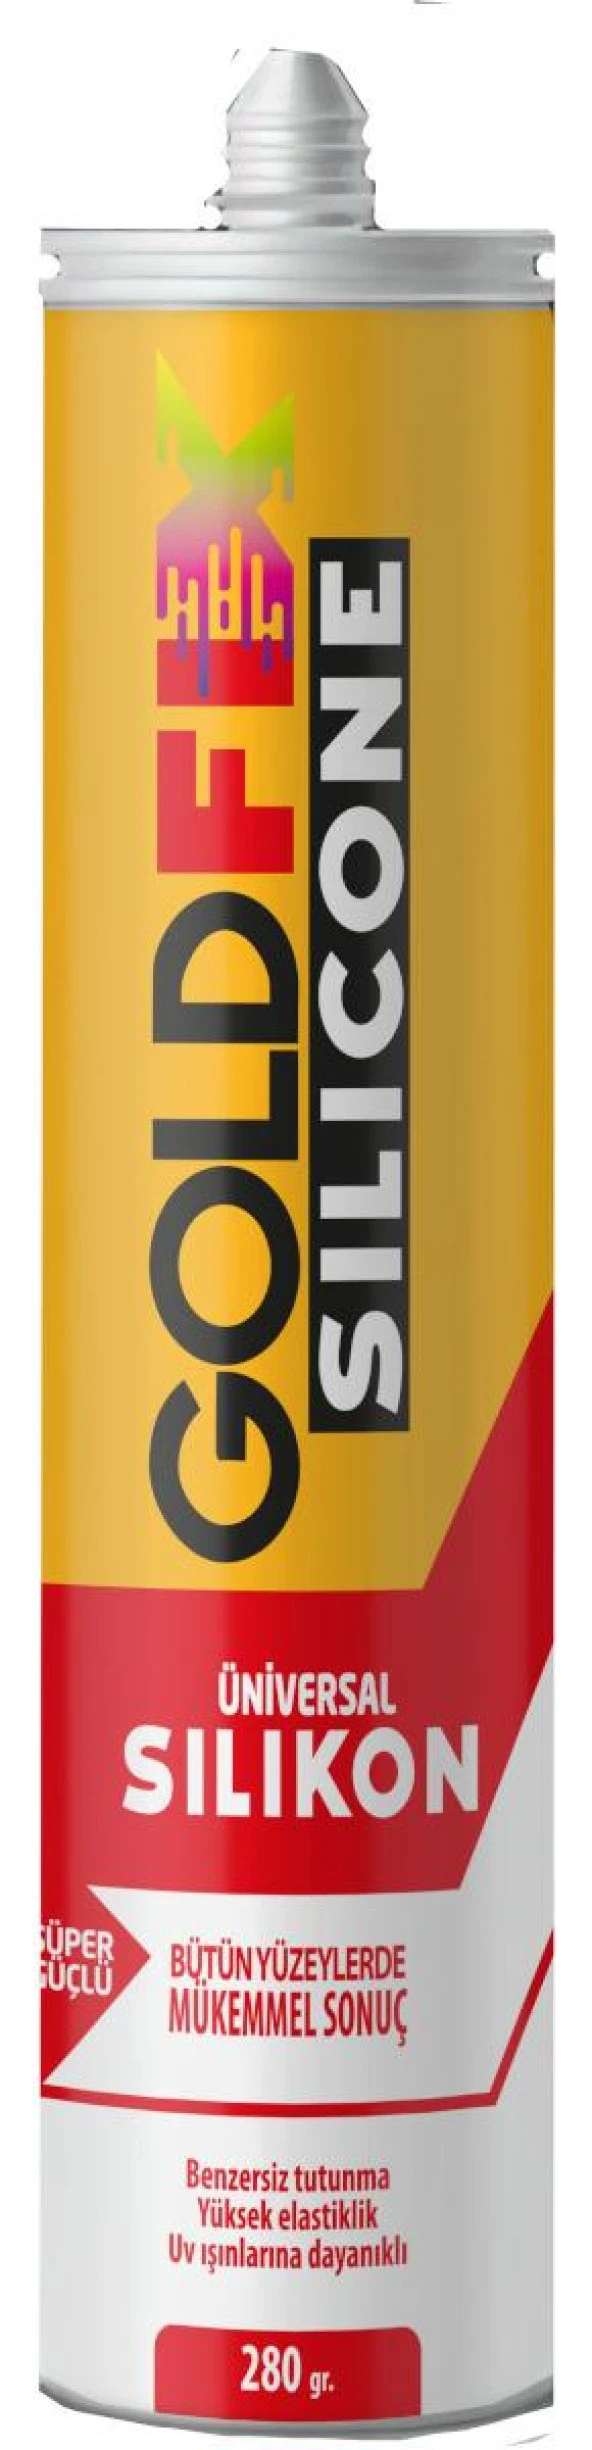 Goldfix Şeffaf Silikon 280 Gr